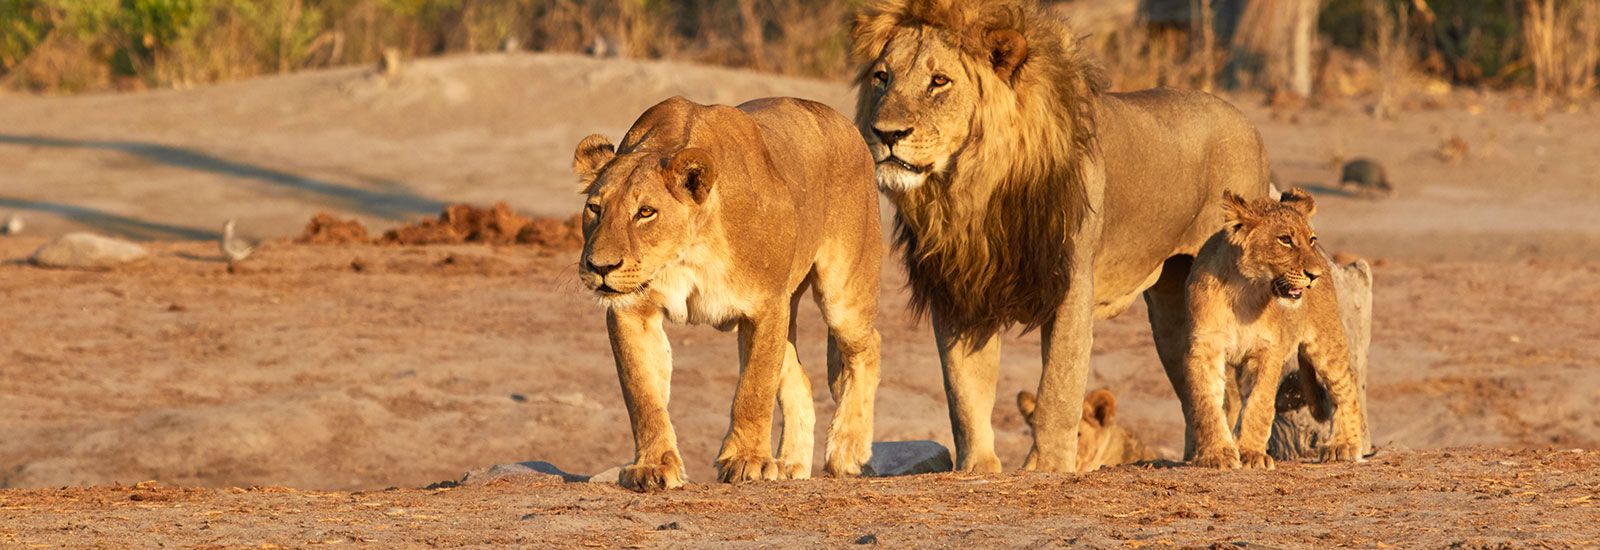 Pride of lions in Botswana